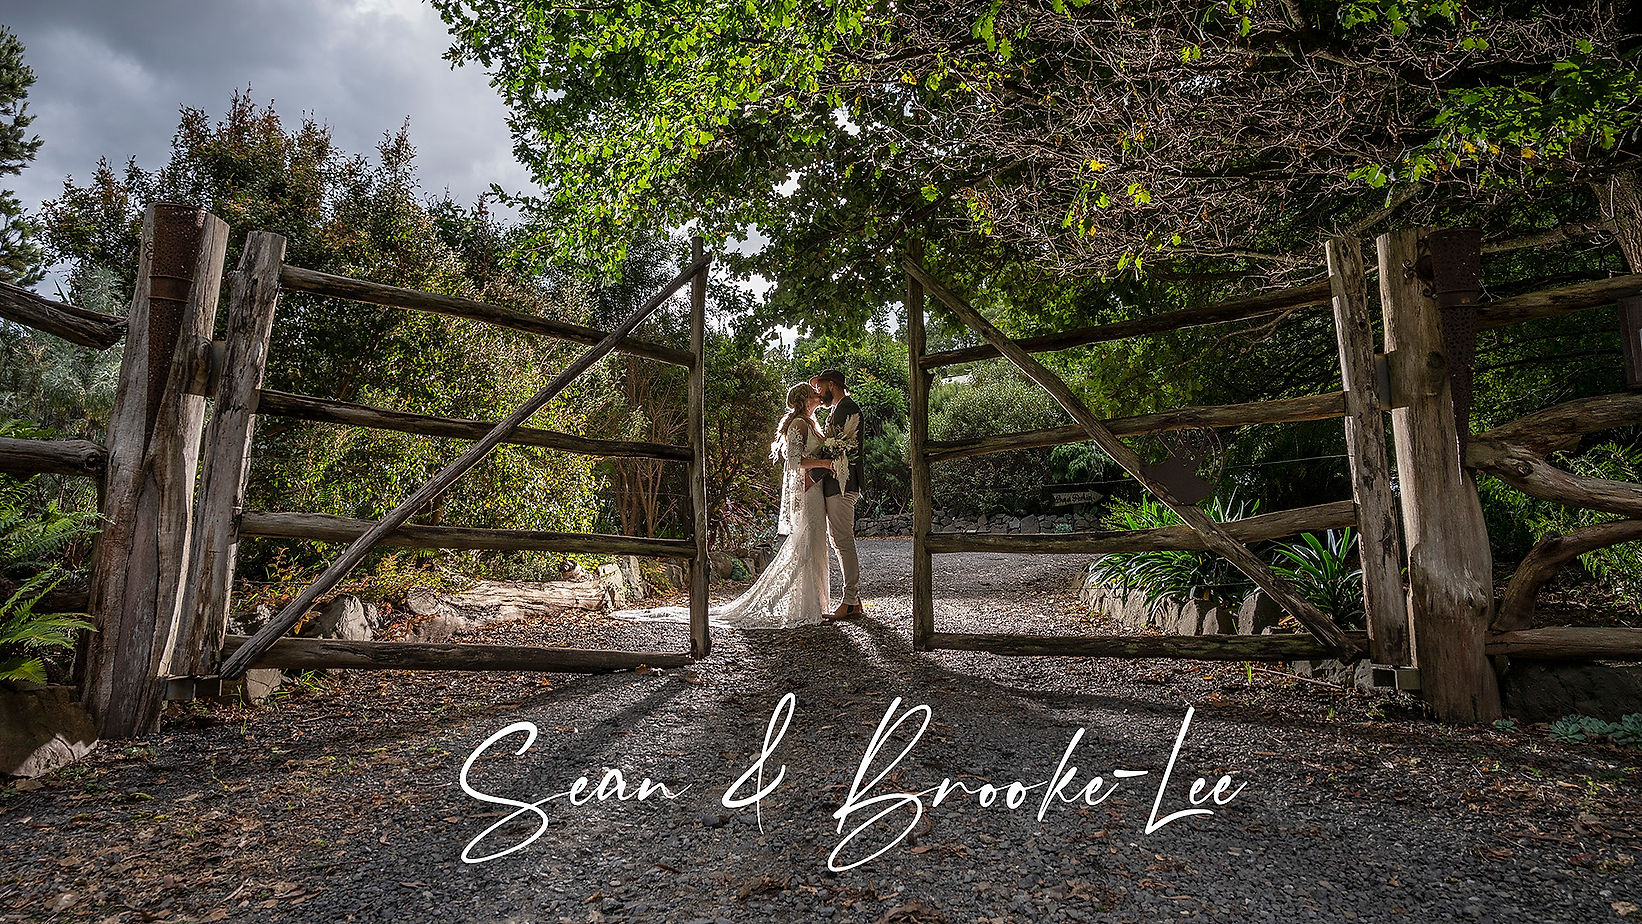 Sean & Brooke-Lee Highlights